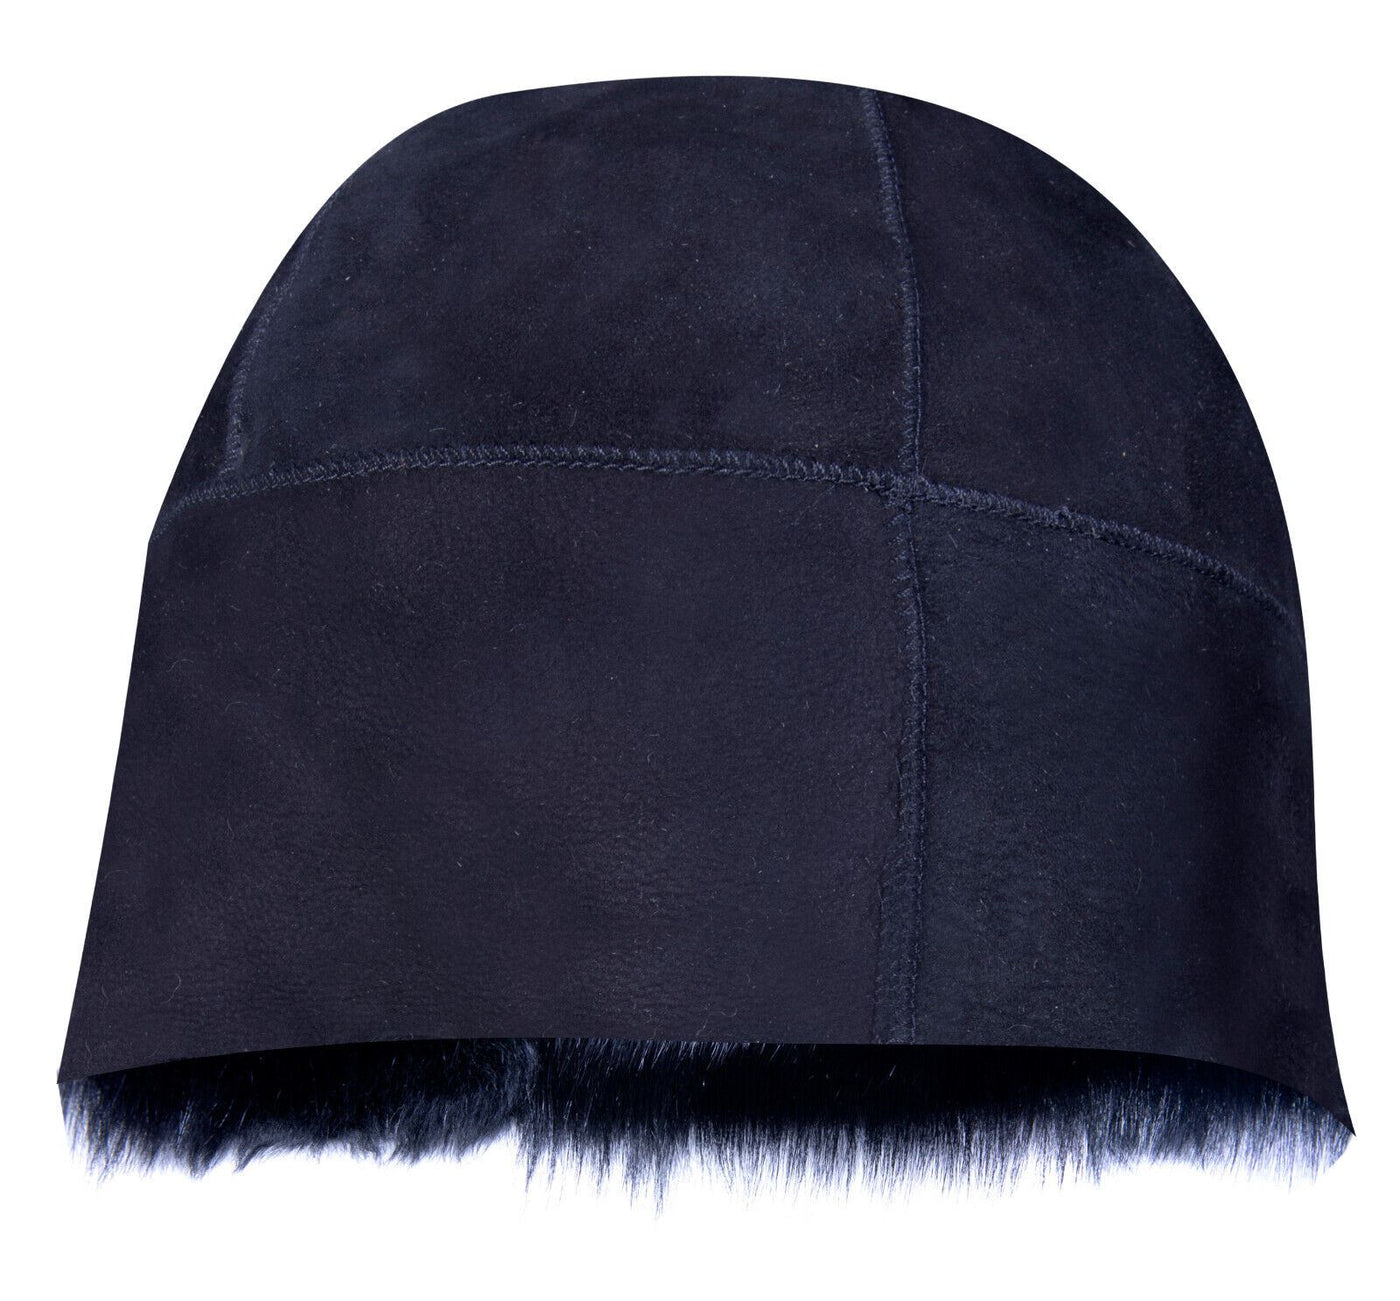 BLACK 100% Sheepskin Shearling Leather Toscana Fur Beanie Round Bucket Hat